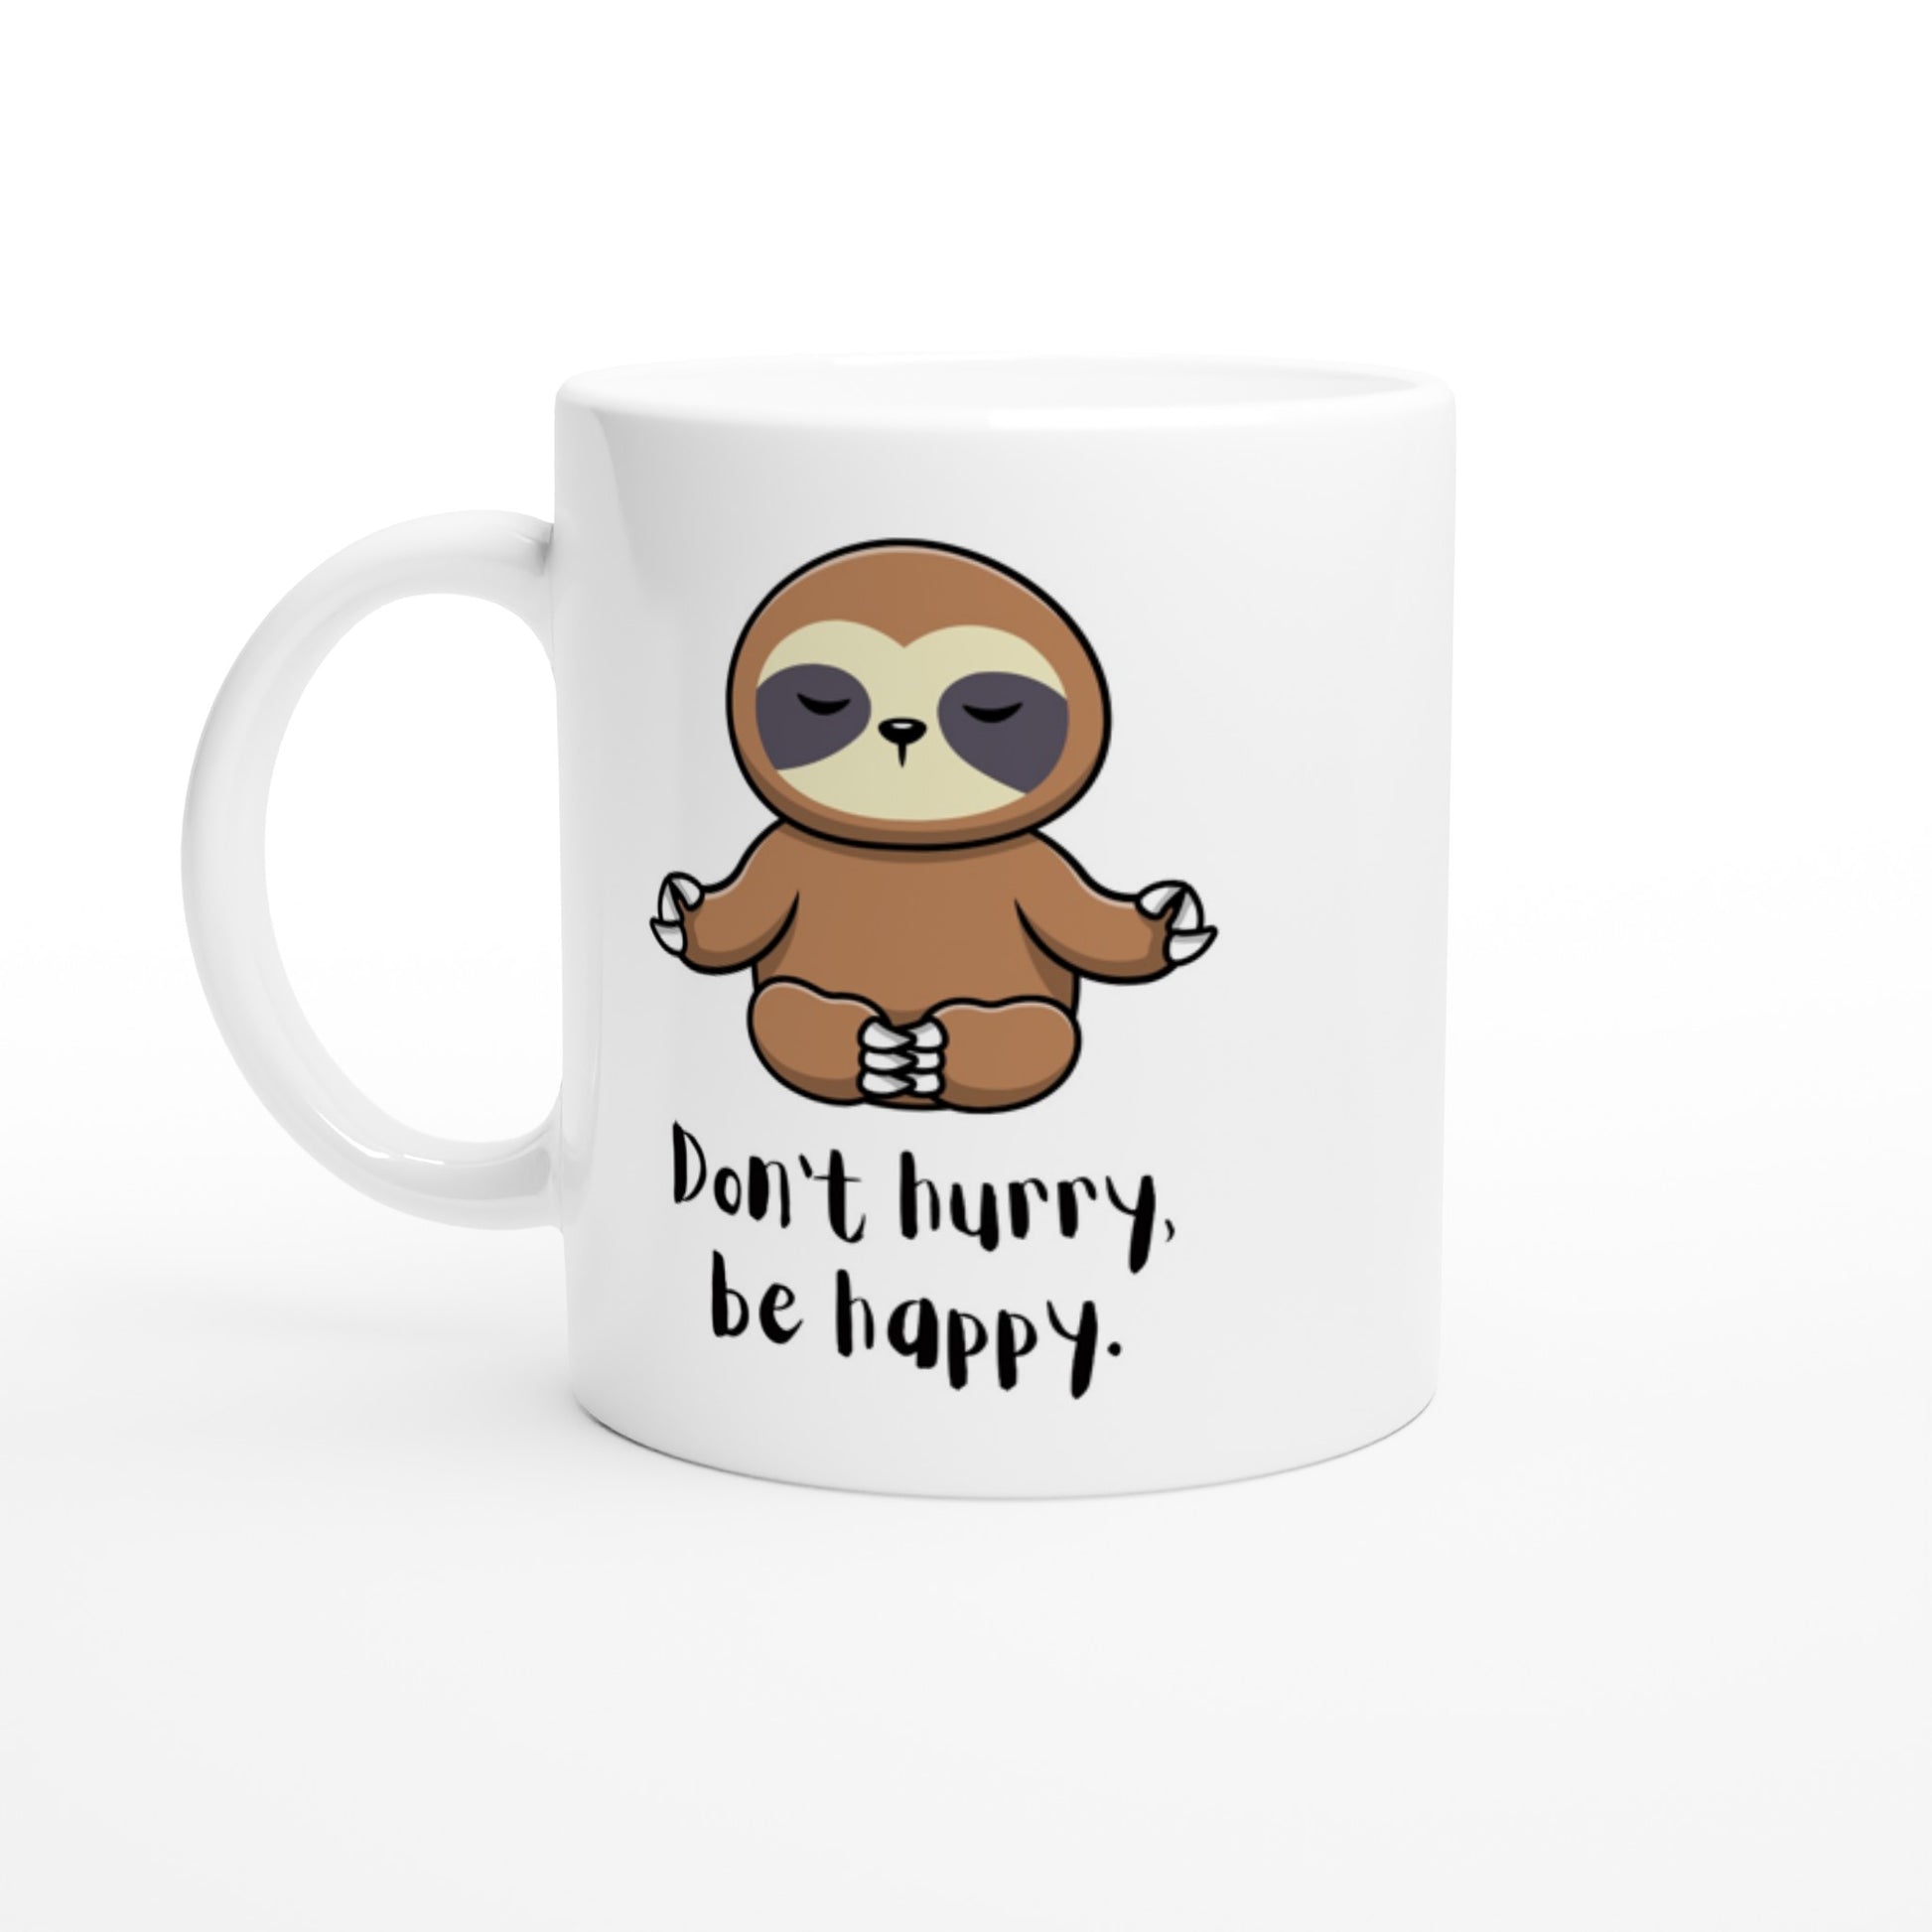 Sloth mug, don't worry be happy, gift.